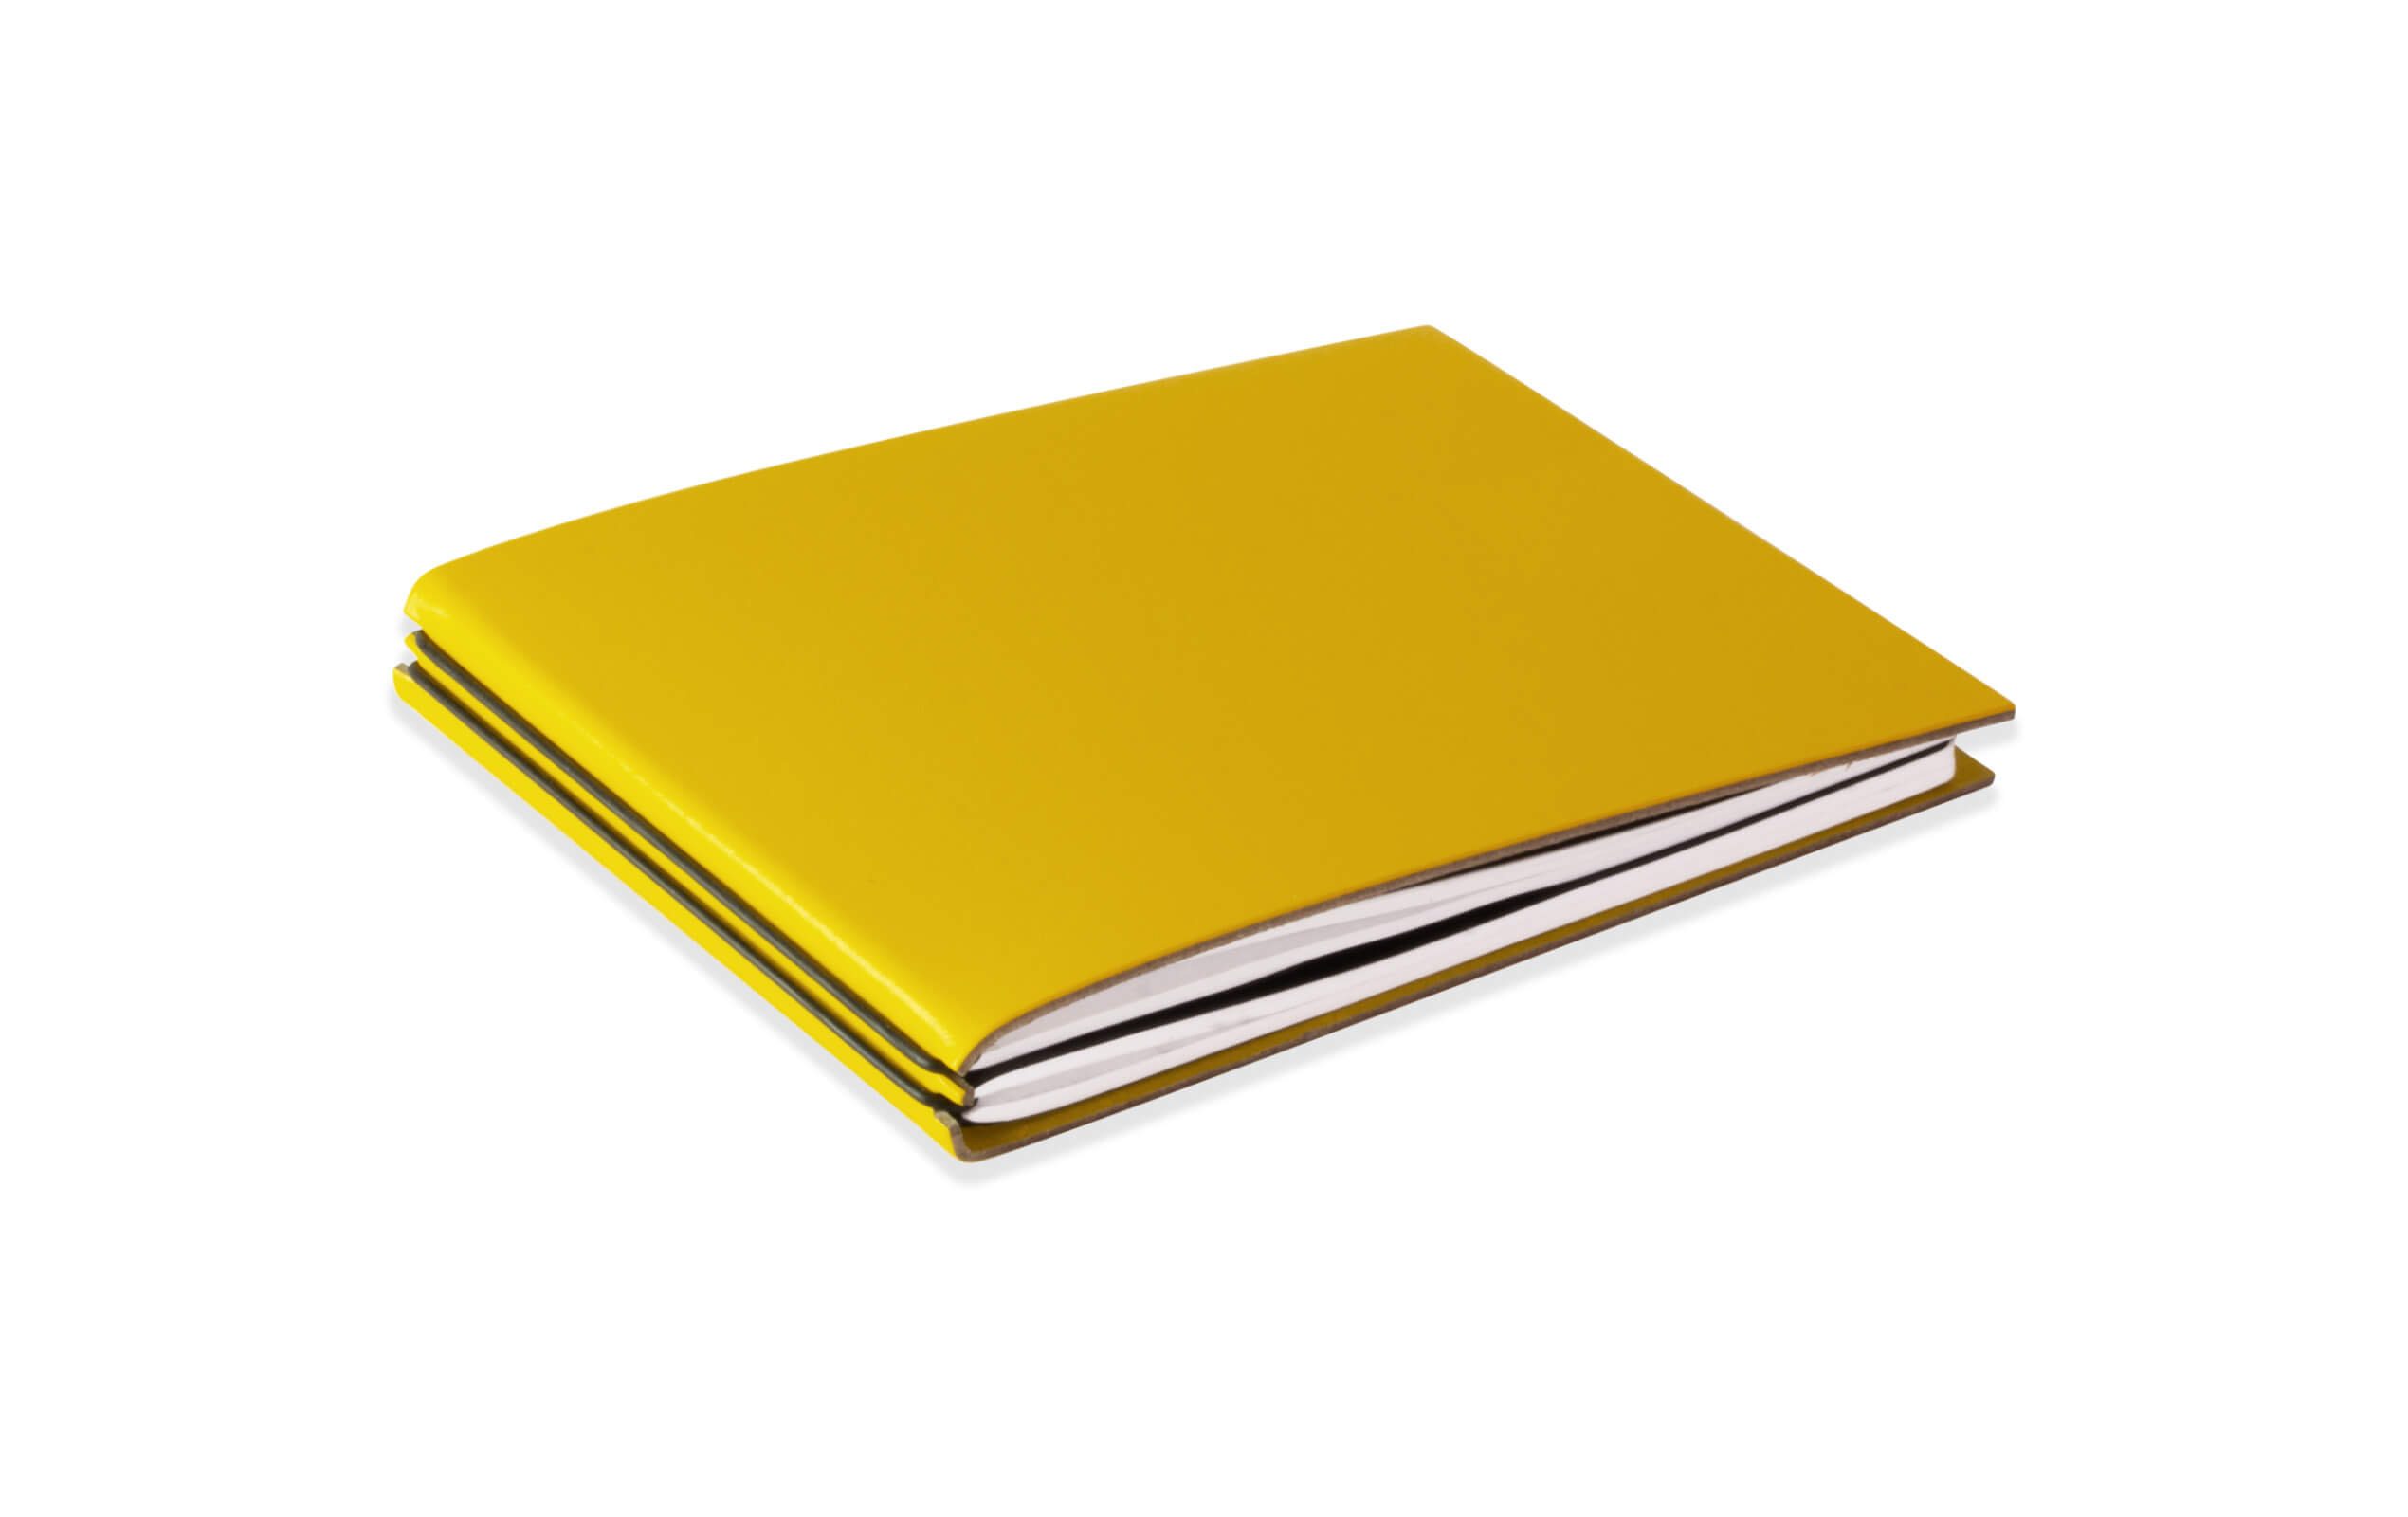 FlowBook A6 paysage - Lefa jaune